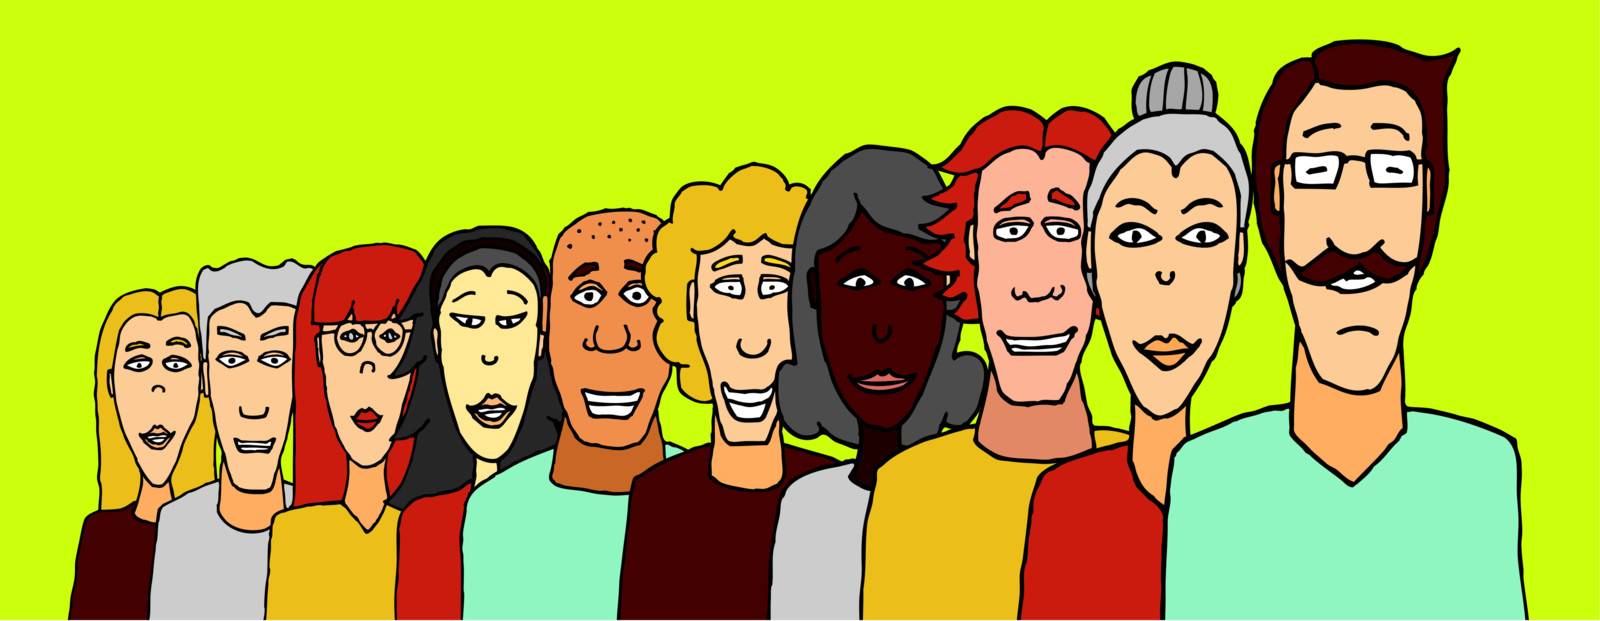 Teamwork diversity / Ethnic variation group